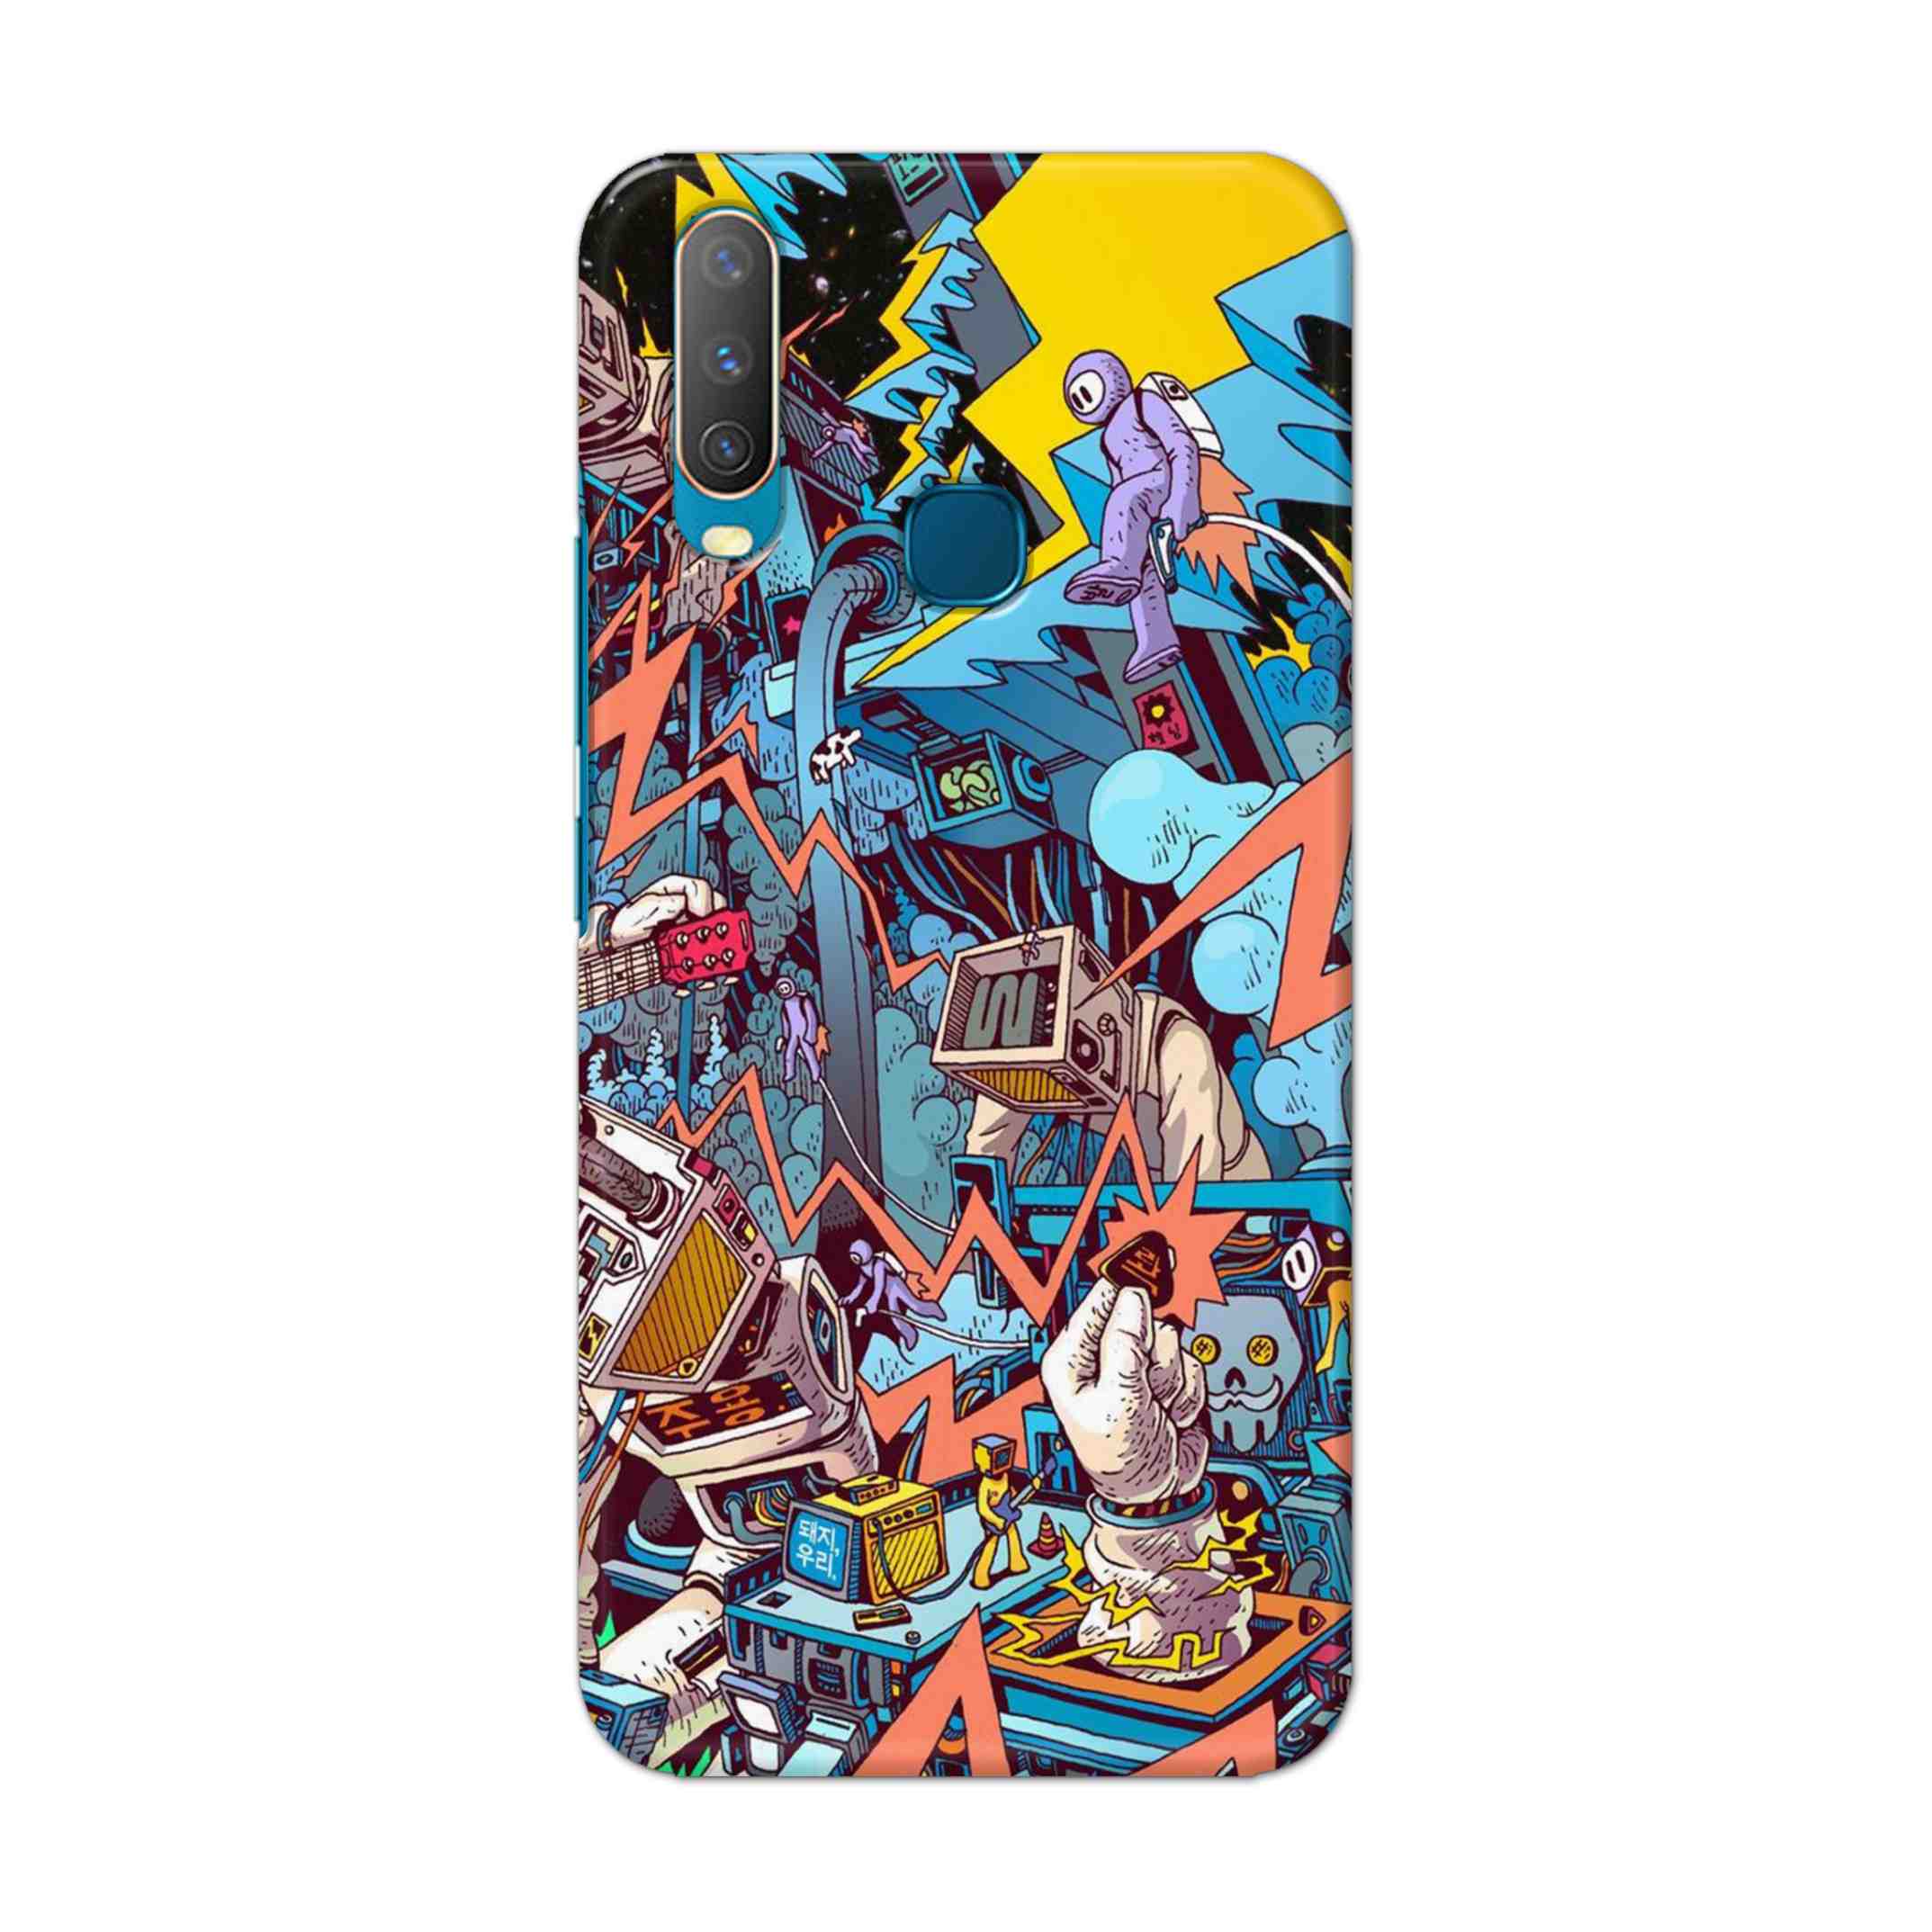 Buy Ofo Panic Hard Back Mobile Phone Case Cover For Vivo Y17 / U10 Online